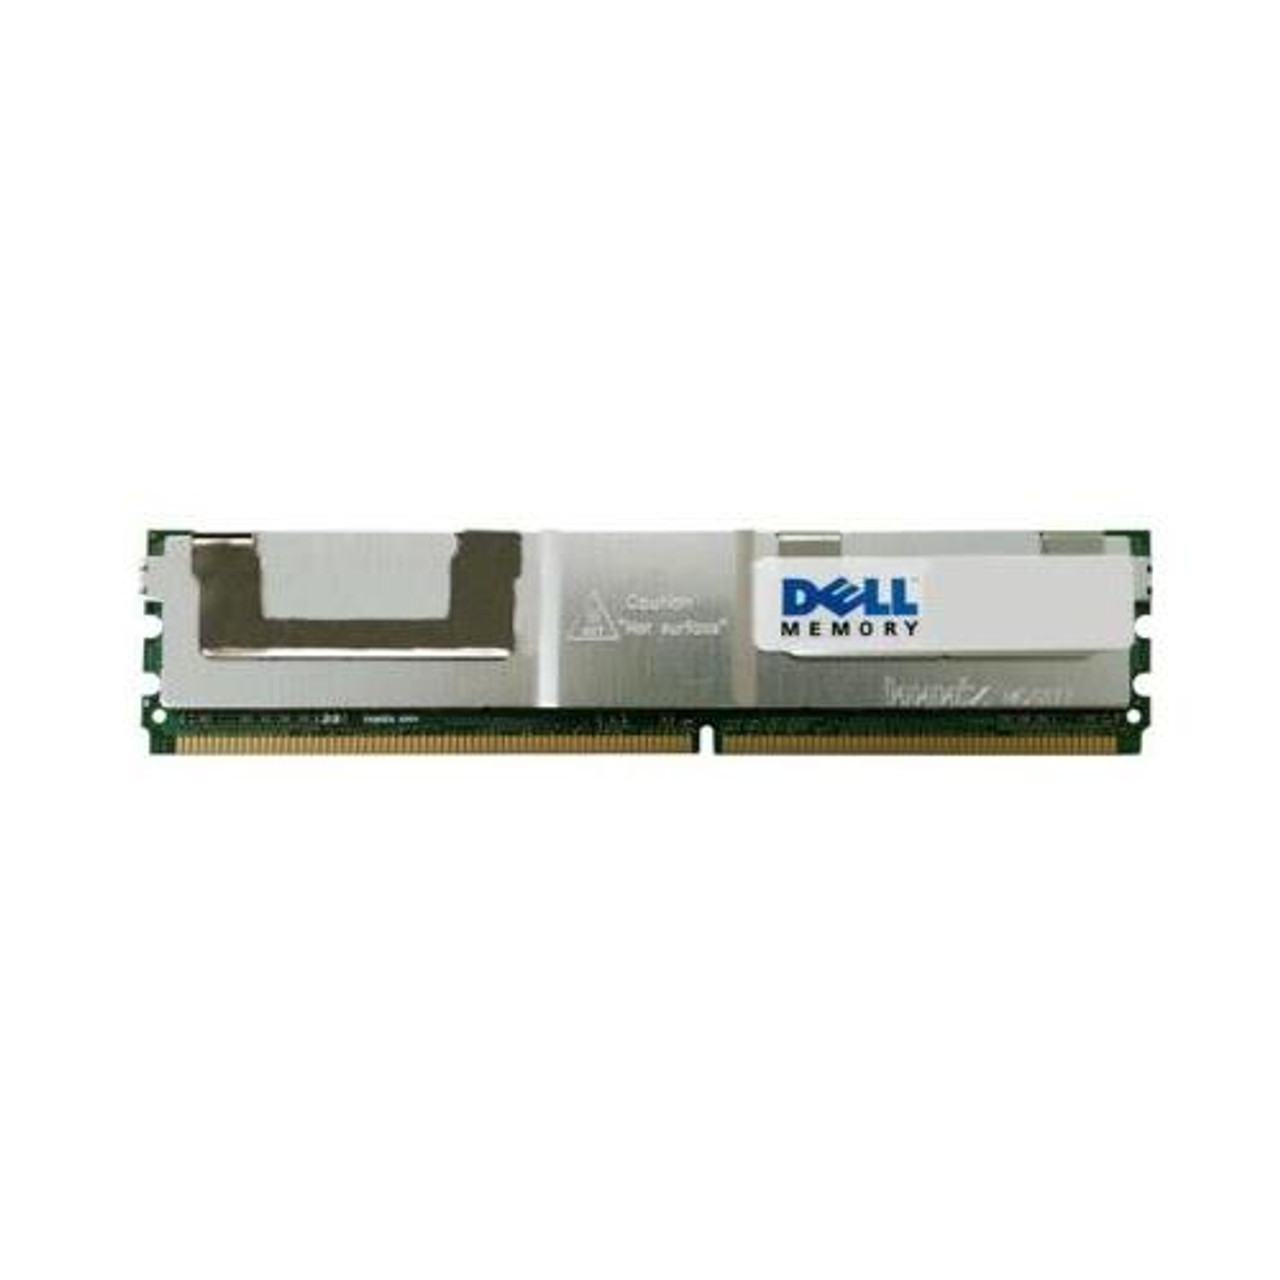 0M227M Dell 4GB DDR2 Fully Buffered FB ECC PC2-5300 667Mhz 2Rx4